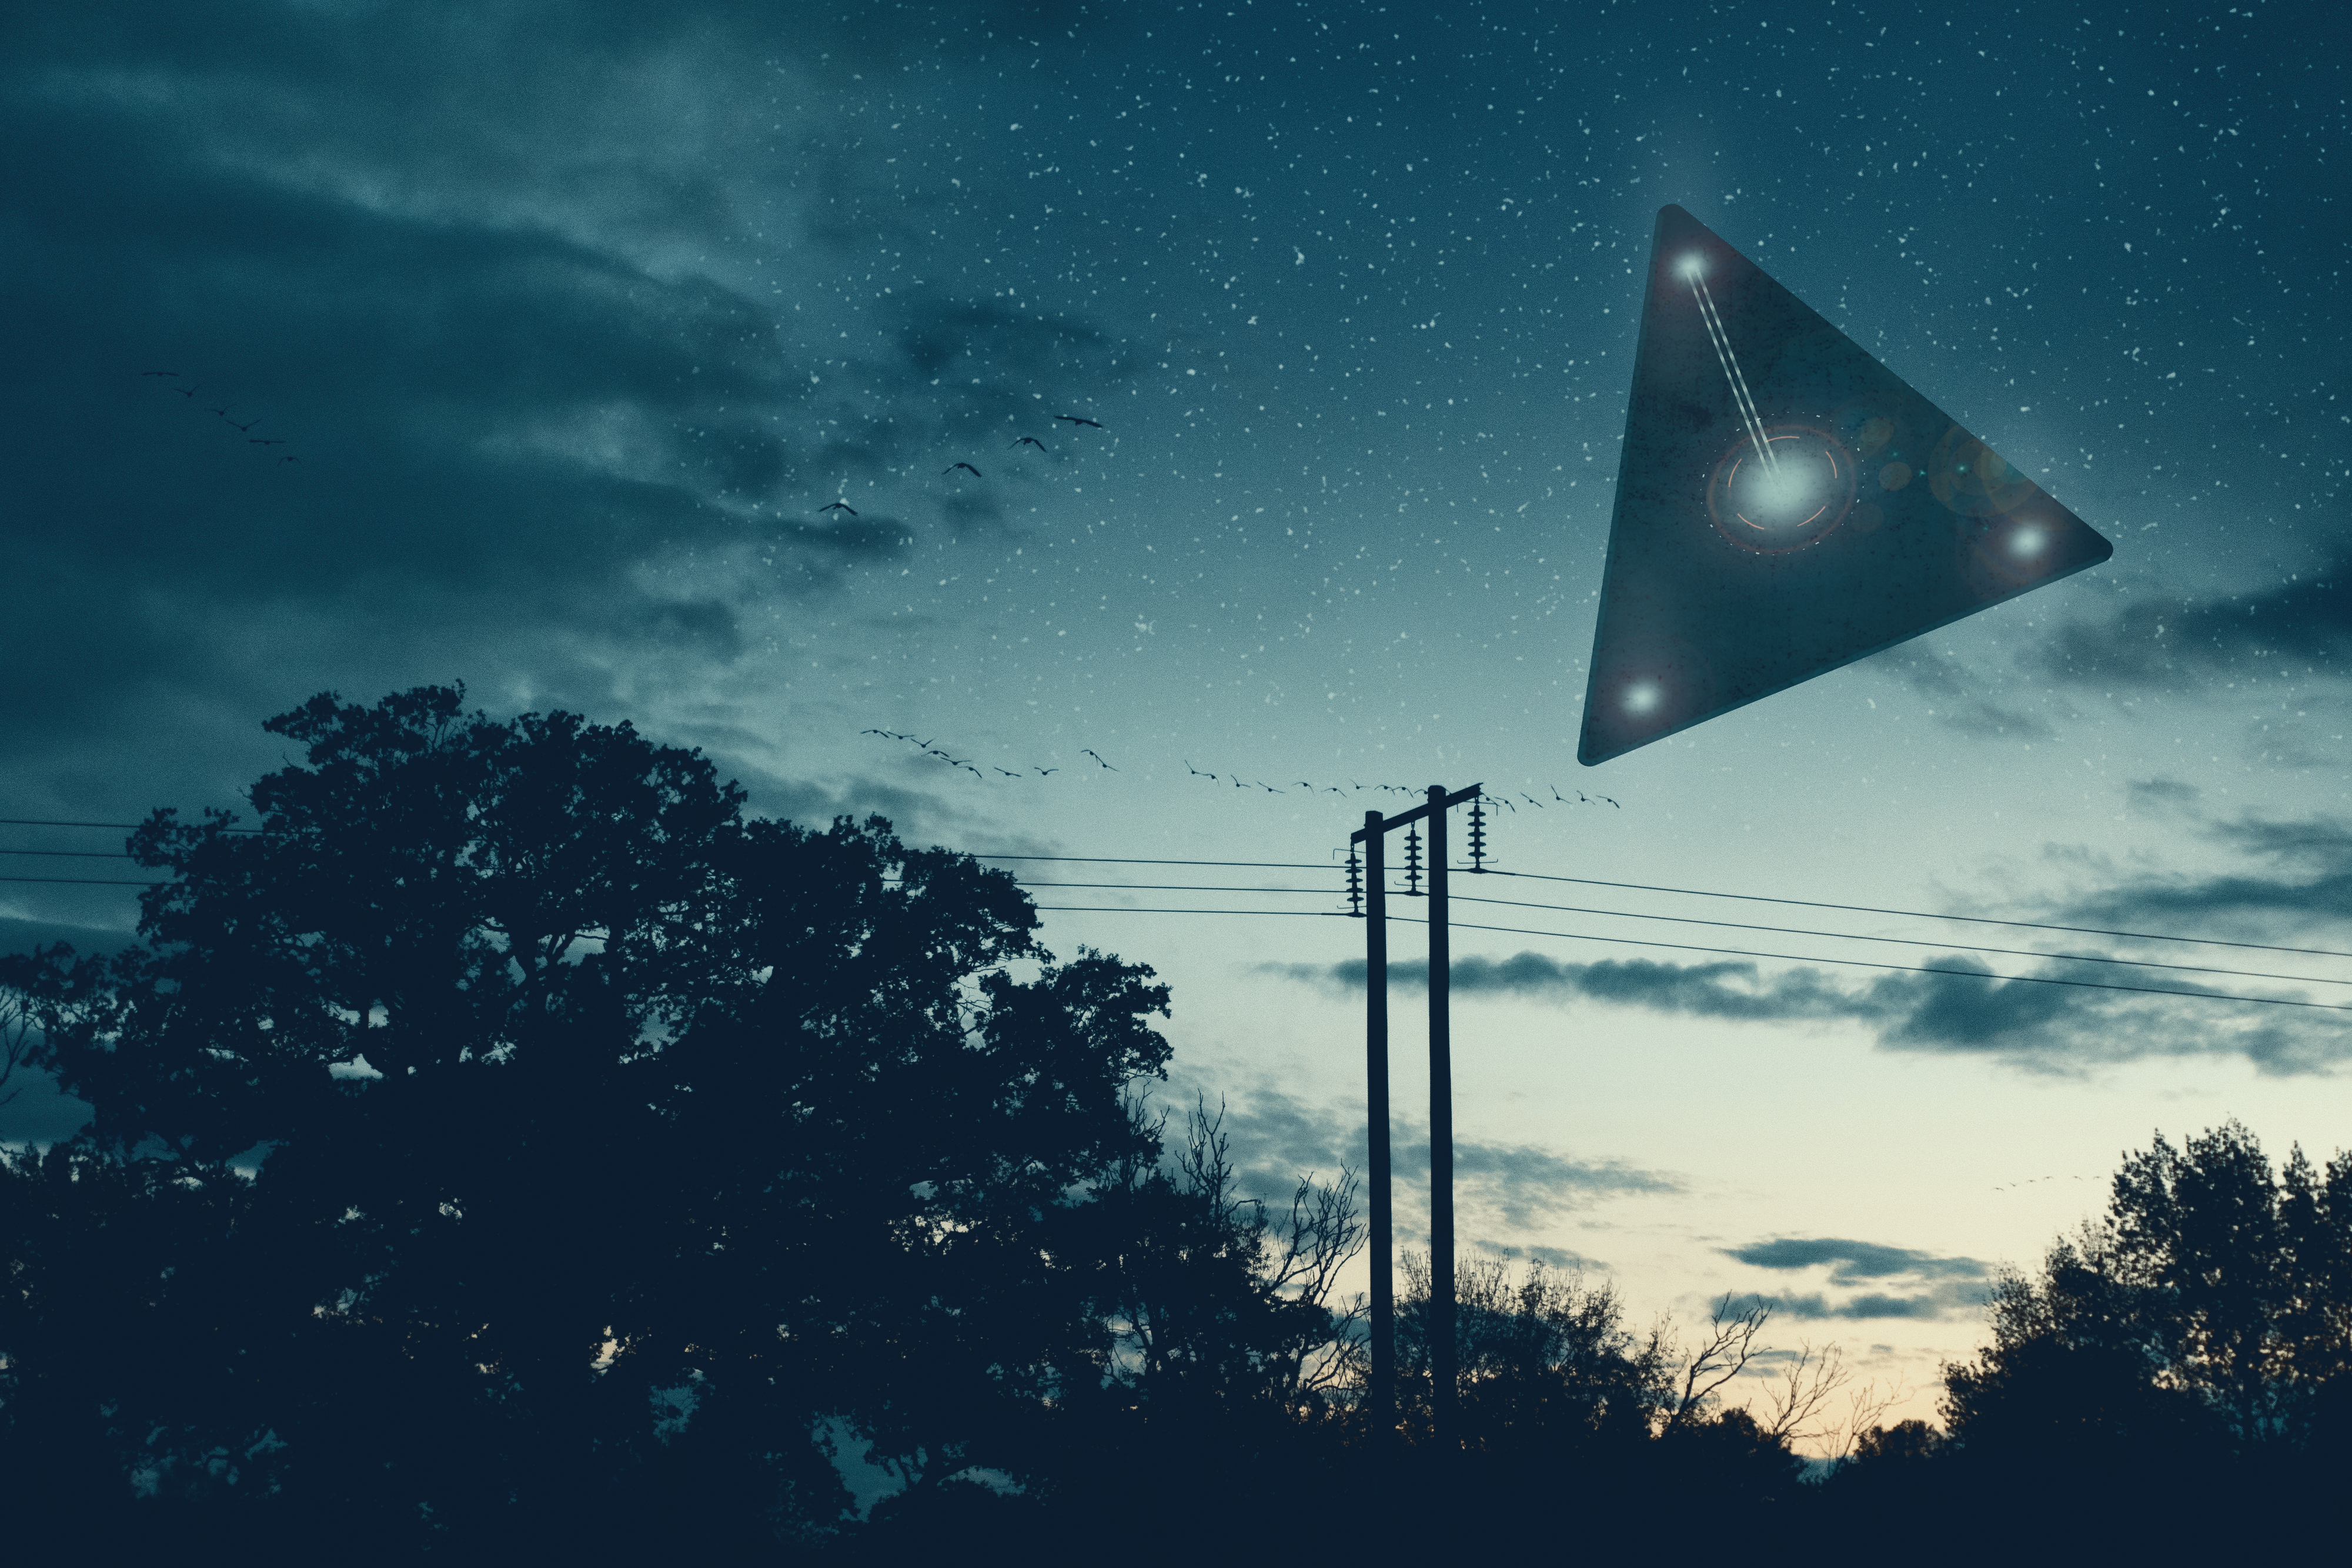 A triangular UFO in the night sky